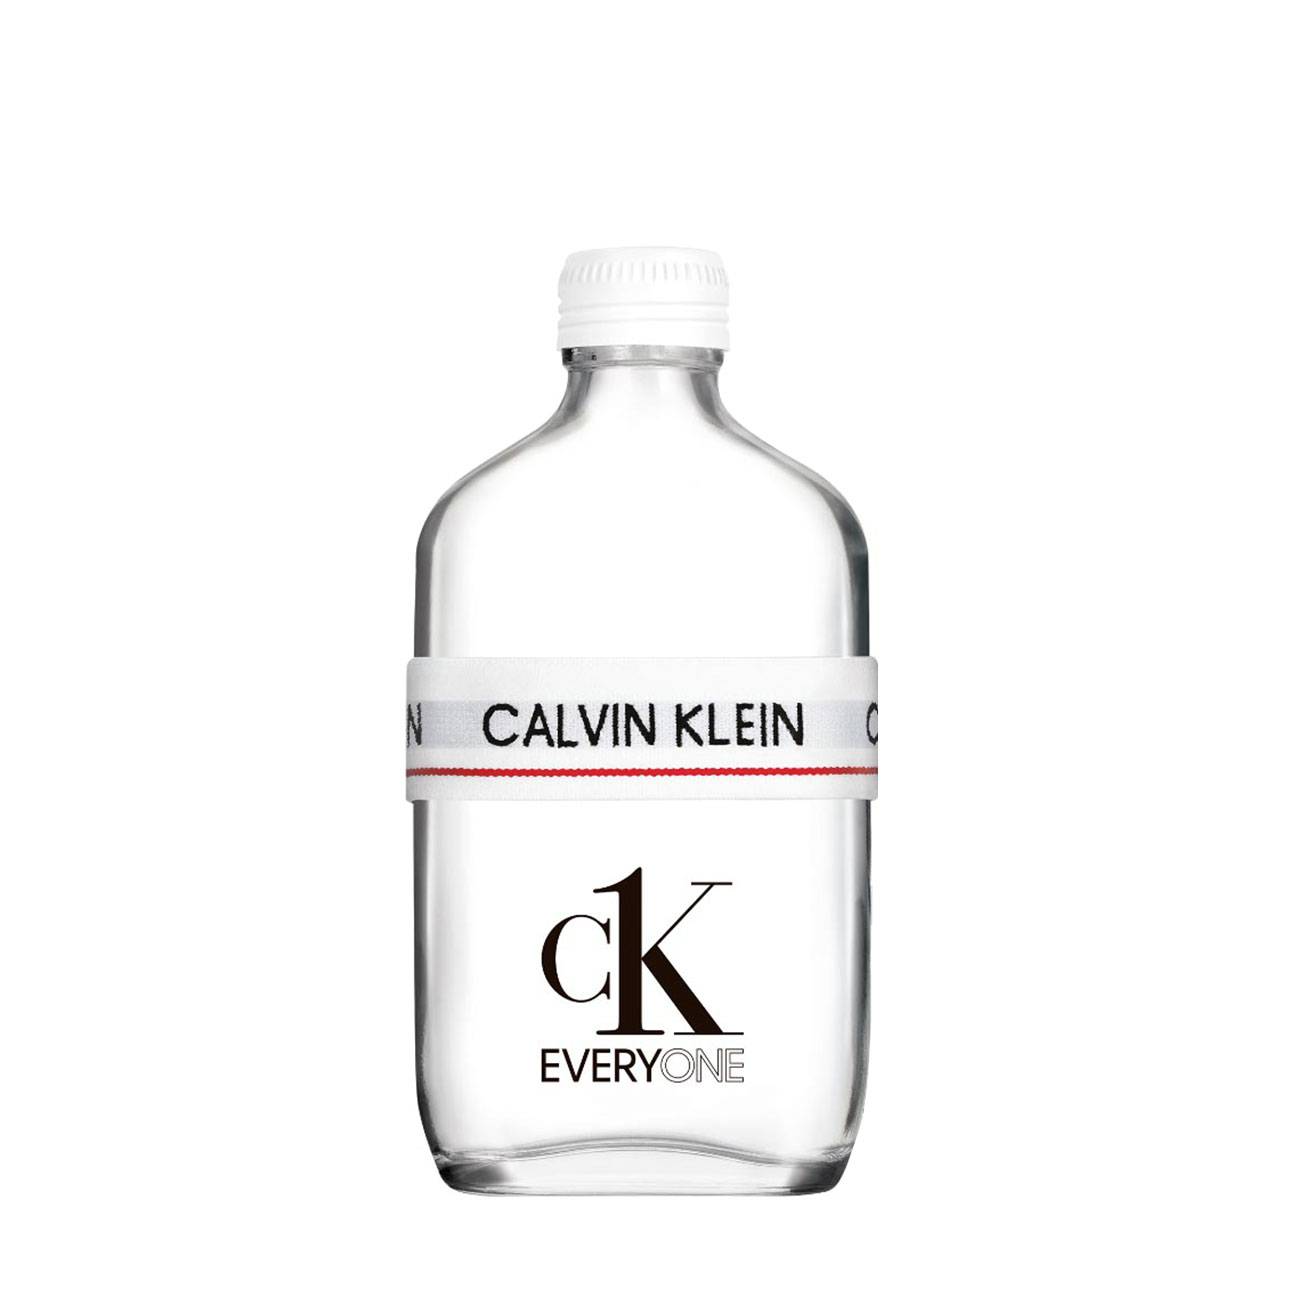 Apa de Toaleta Calvin Klein CK EVERYONE 100ml cu comanda online